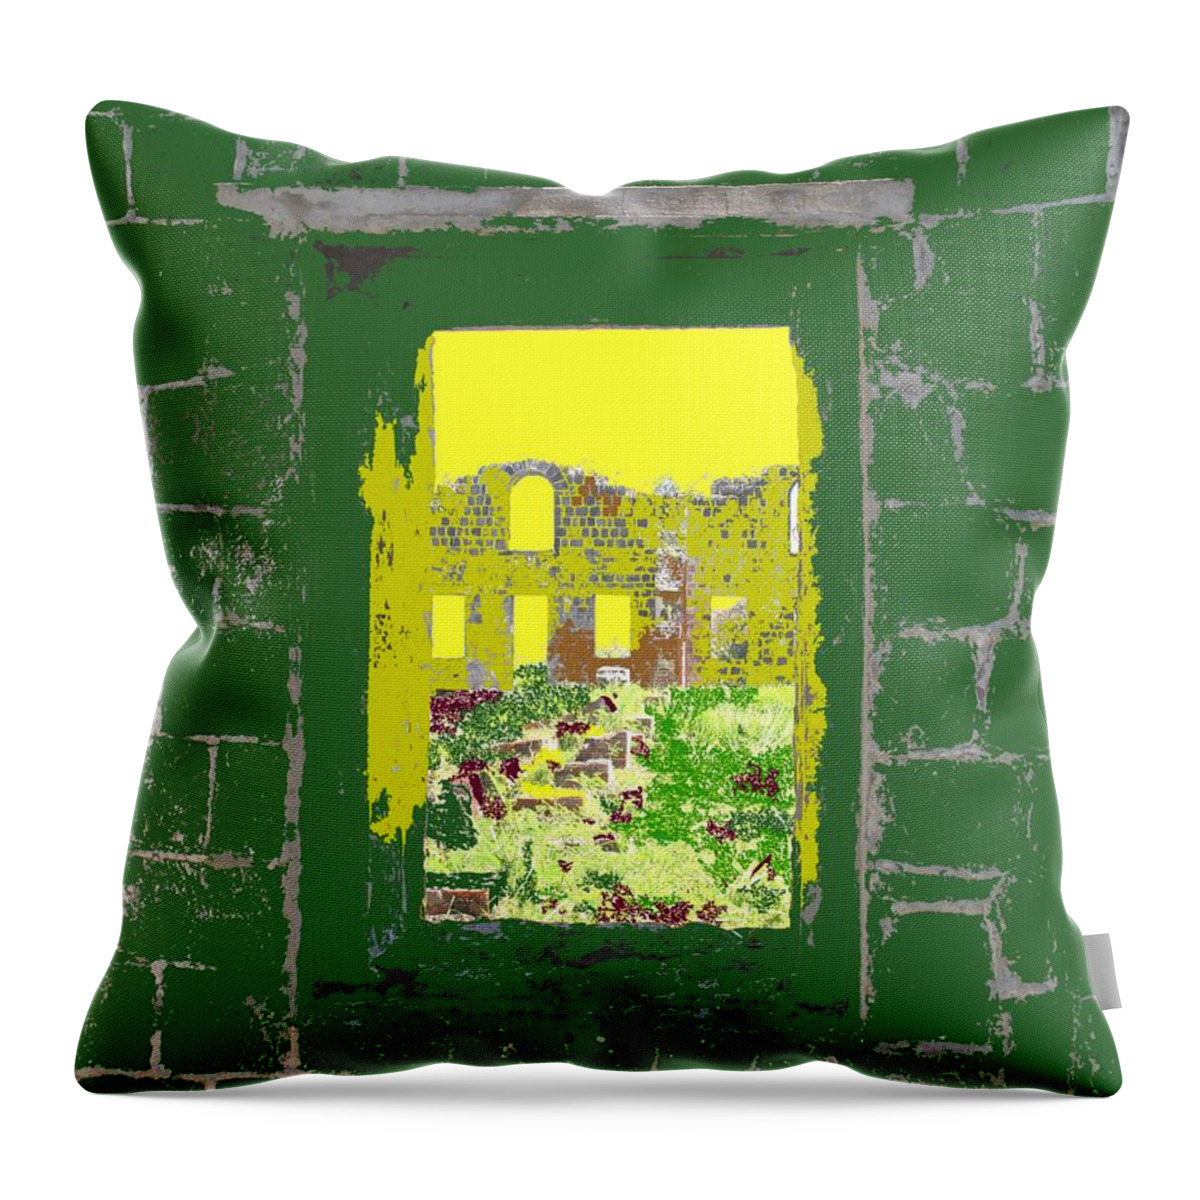 Brimstone Throw Pillow featuring the photograph Brimstone Window by Ian MacDonald